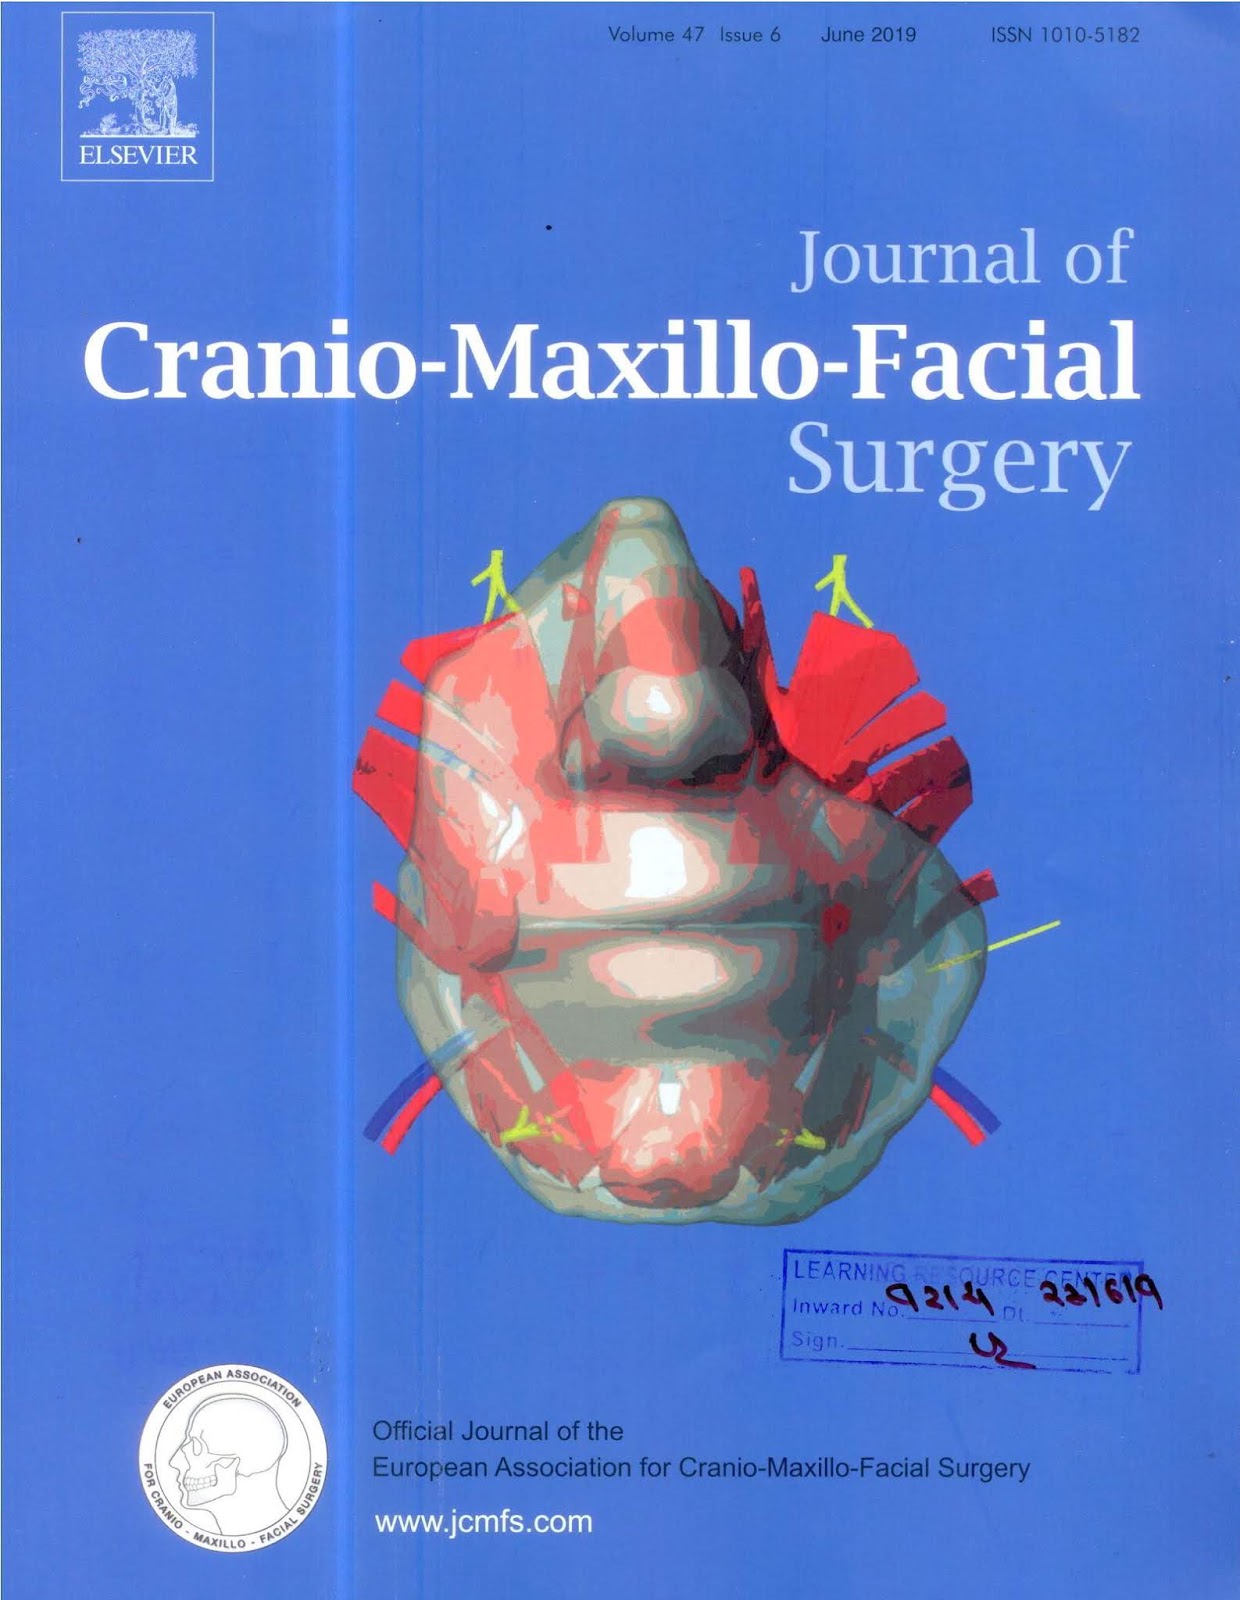 https://www.sciencedirect.com/journal/journal-of-cranio-maxillofacial-surgery/vol/47/issue/6